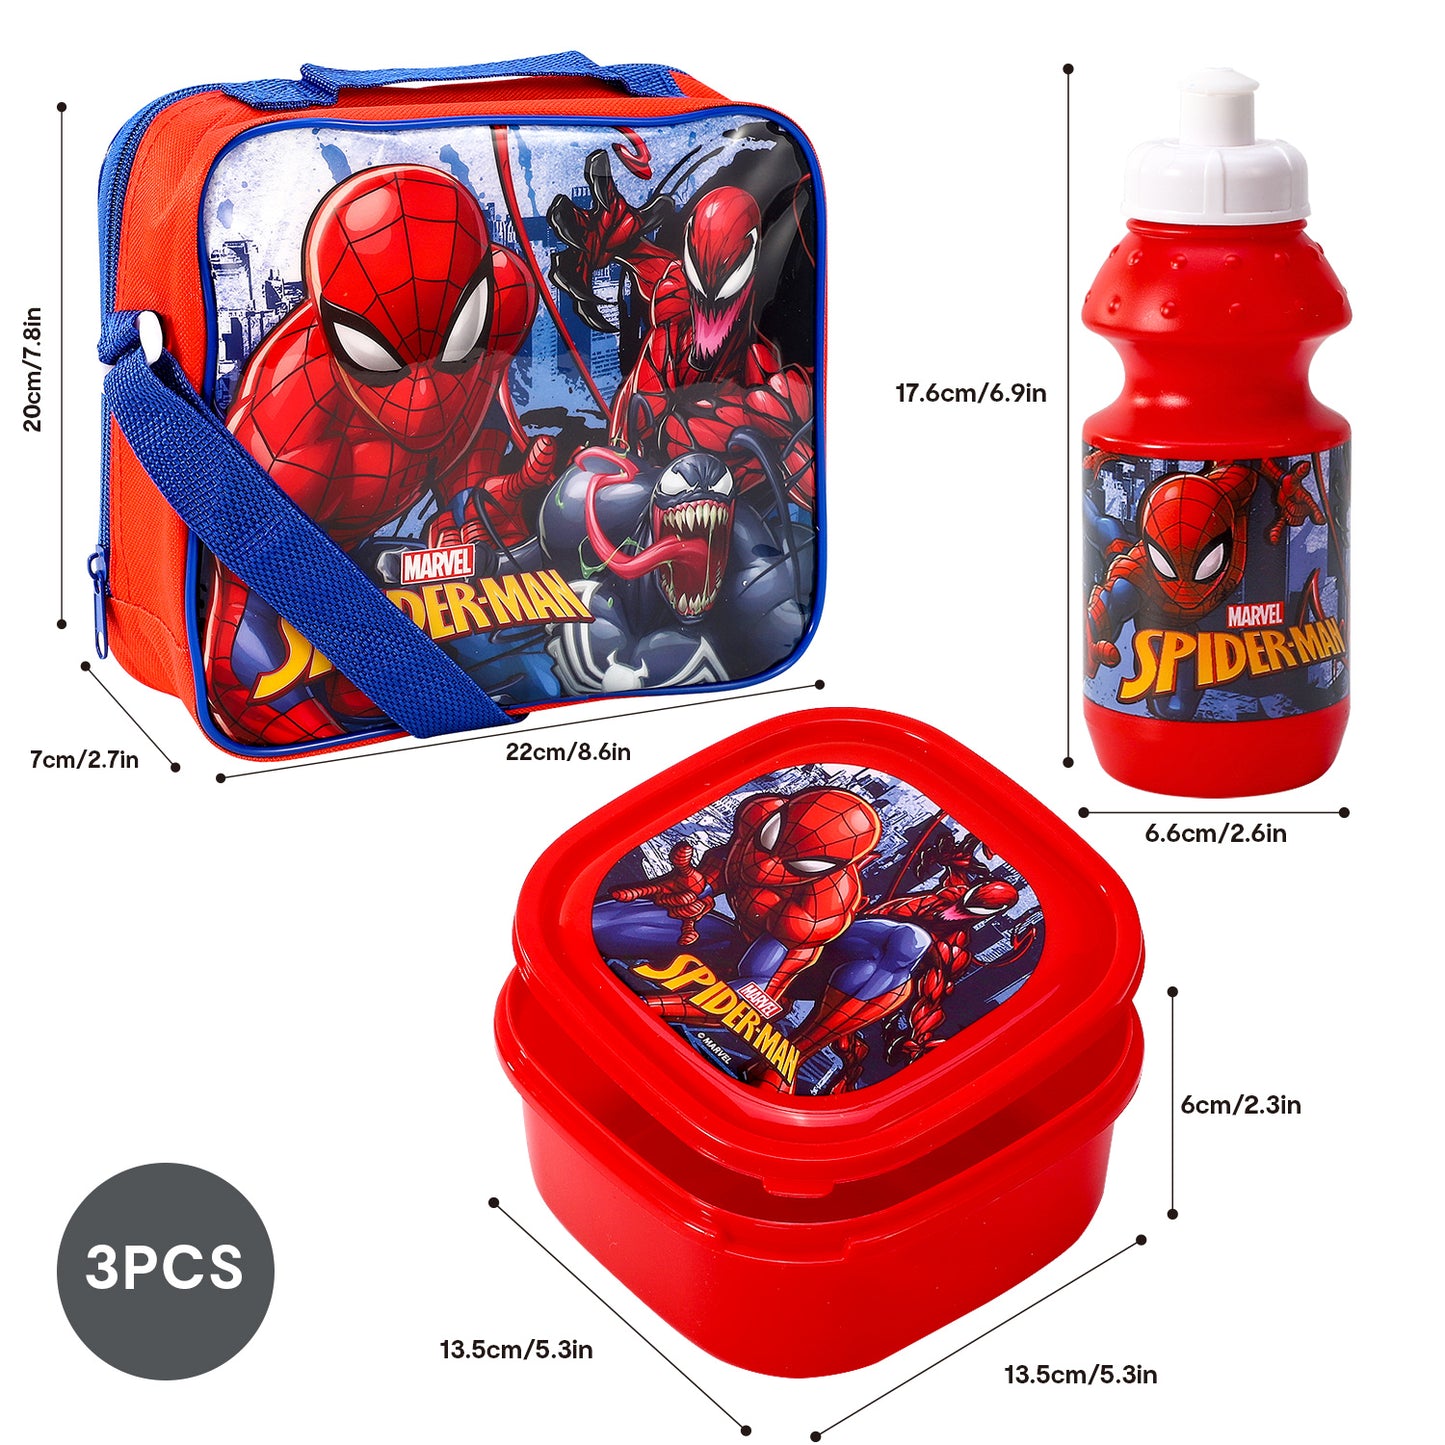 Spider-Man 3Pc Lunch Set, Lunch Bag, Plastic Bottle, Storage Container School Day